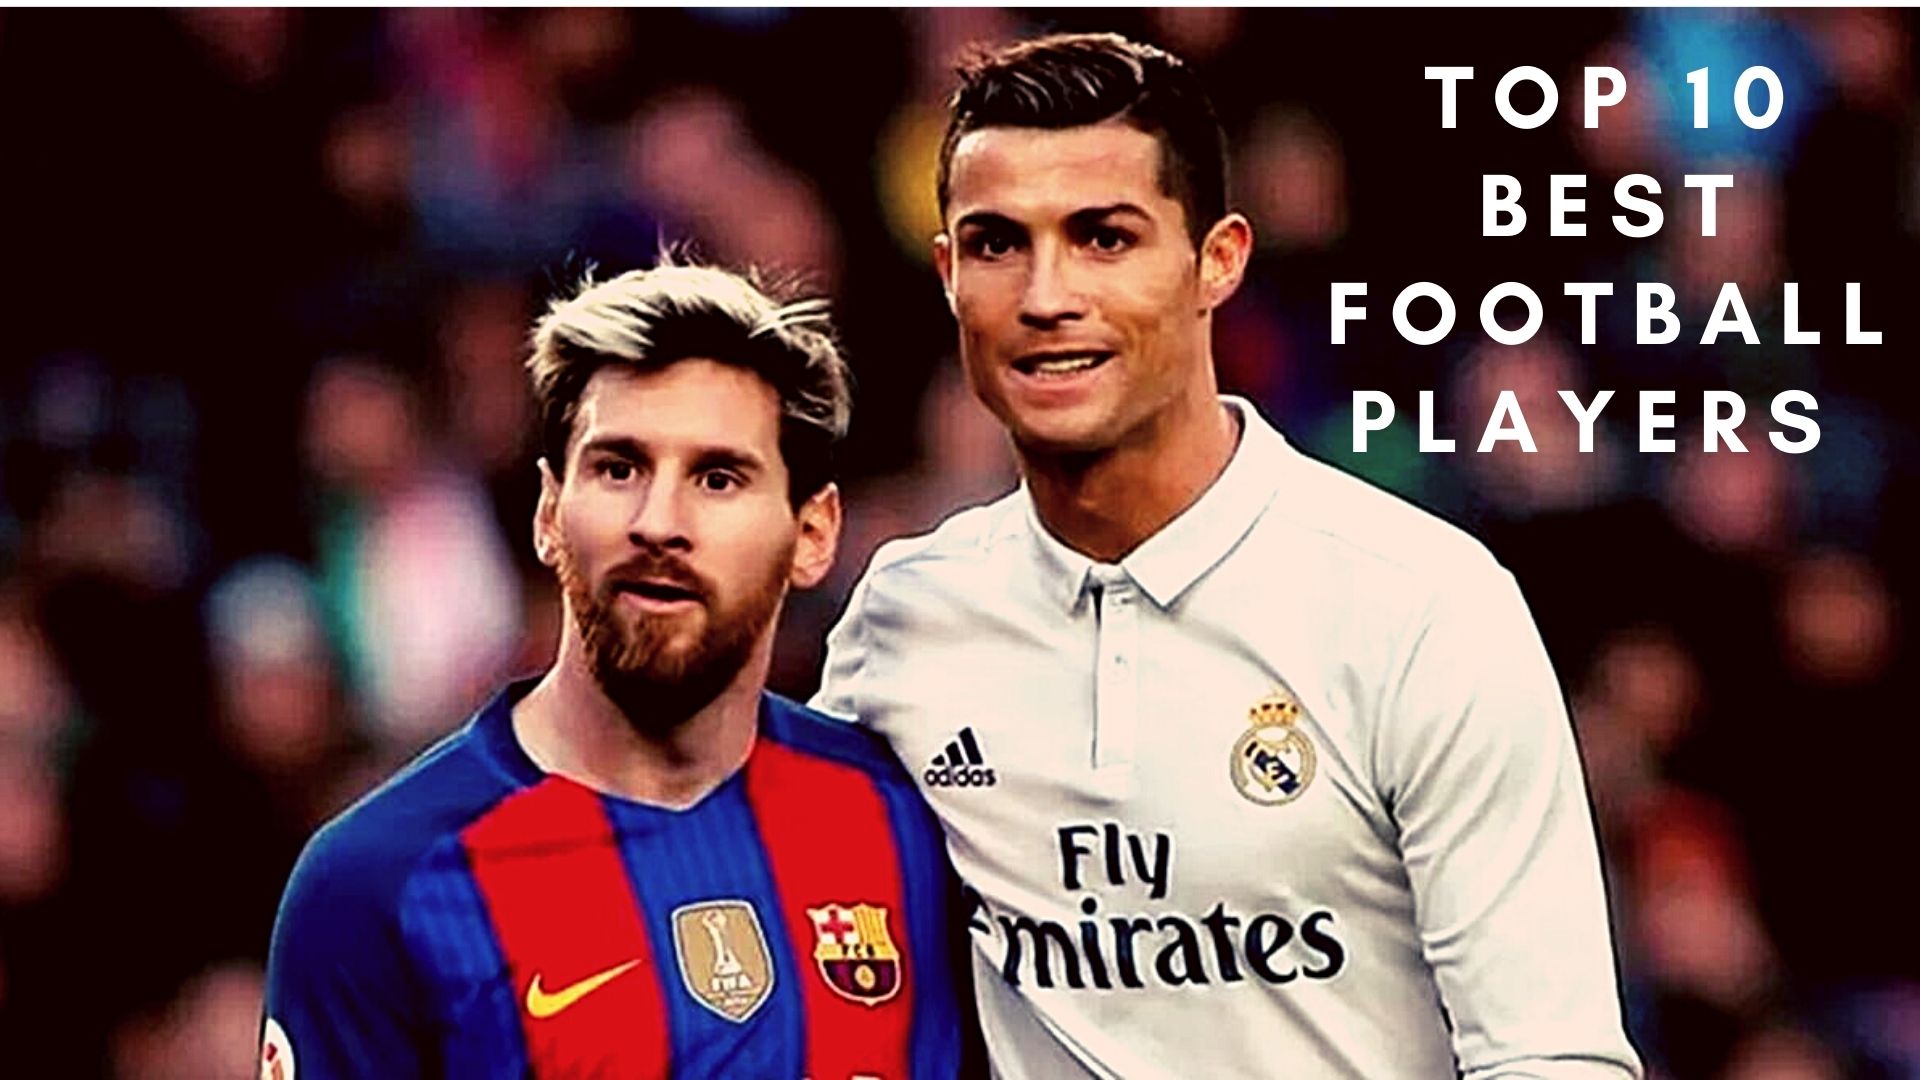 Top 10 Best Football Players Messi Ronaldo maradona